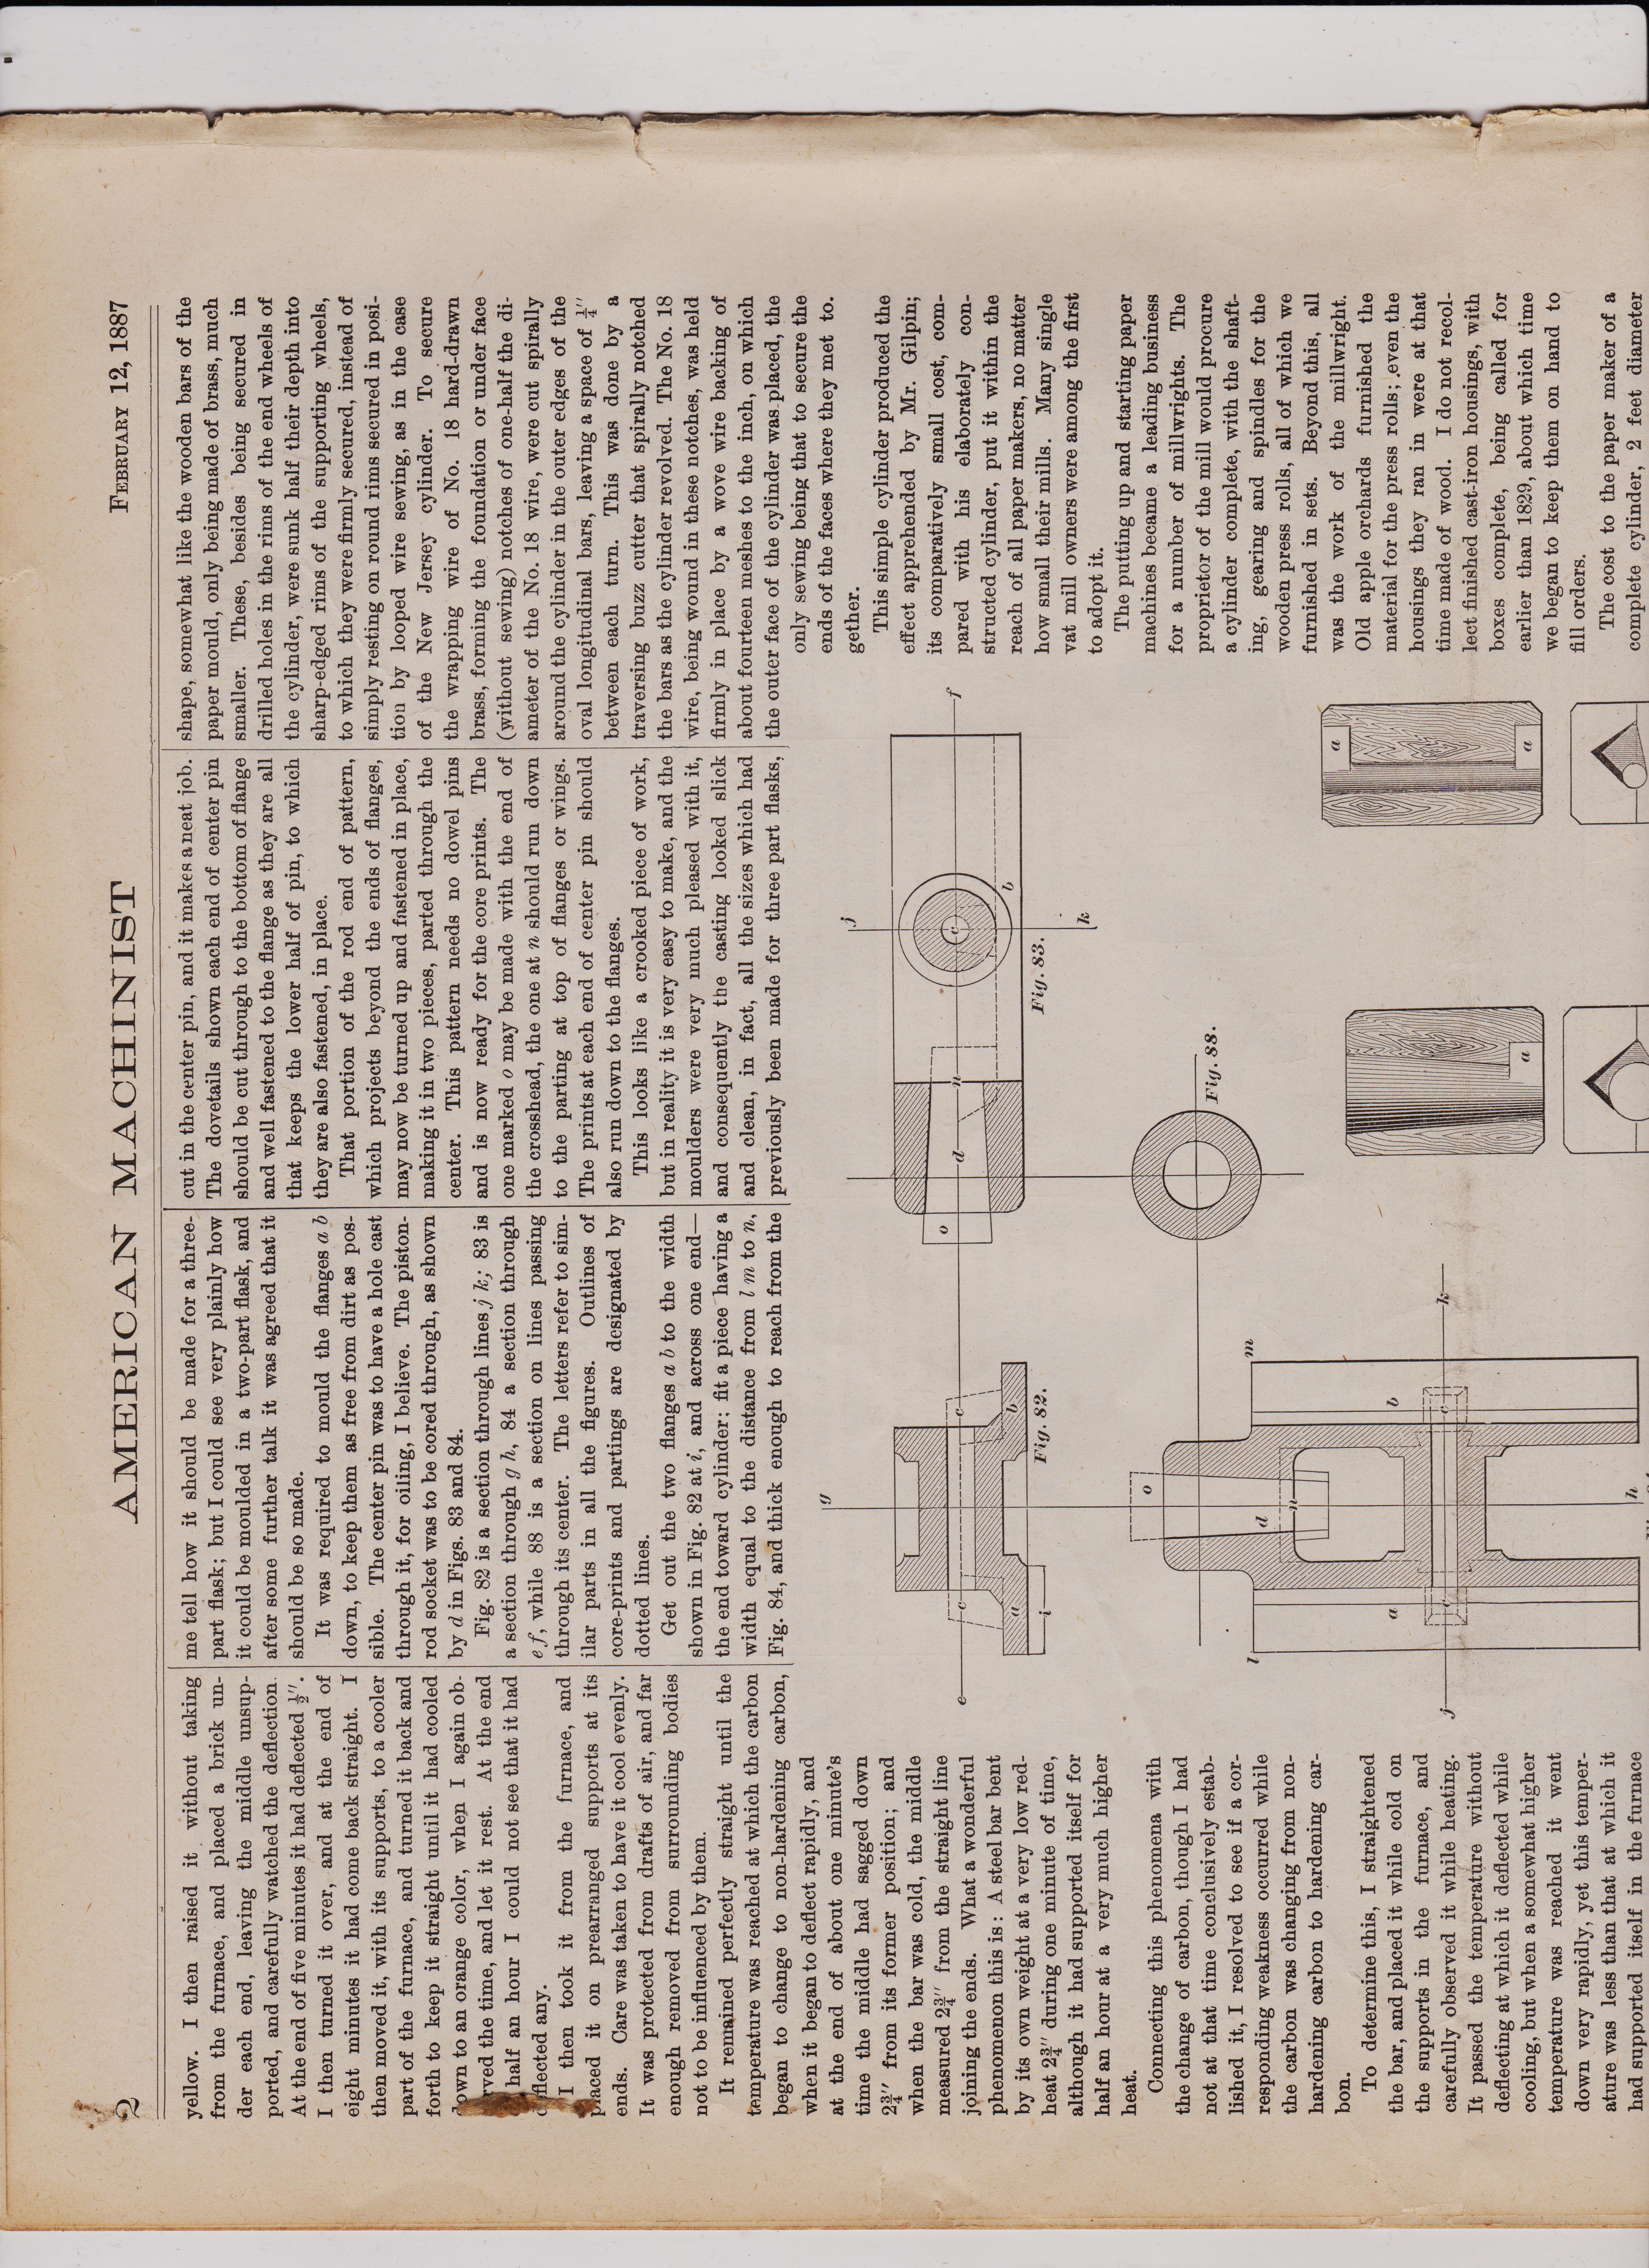 https://antiquemachinery.com/images-American-Machinist-Feb-12-1887/American-Machinist-Feb-12-1887-pg-2-top-Some-Notes-on-using-hardening-Blacksmithing-Steel-Early-Engineeing-Reminisences-Pattern-Making.jpeg